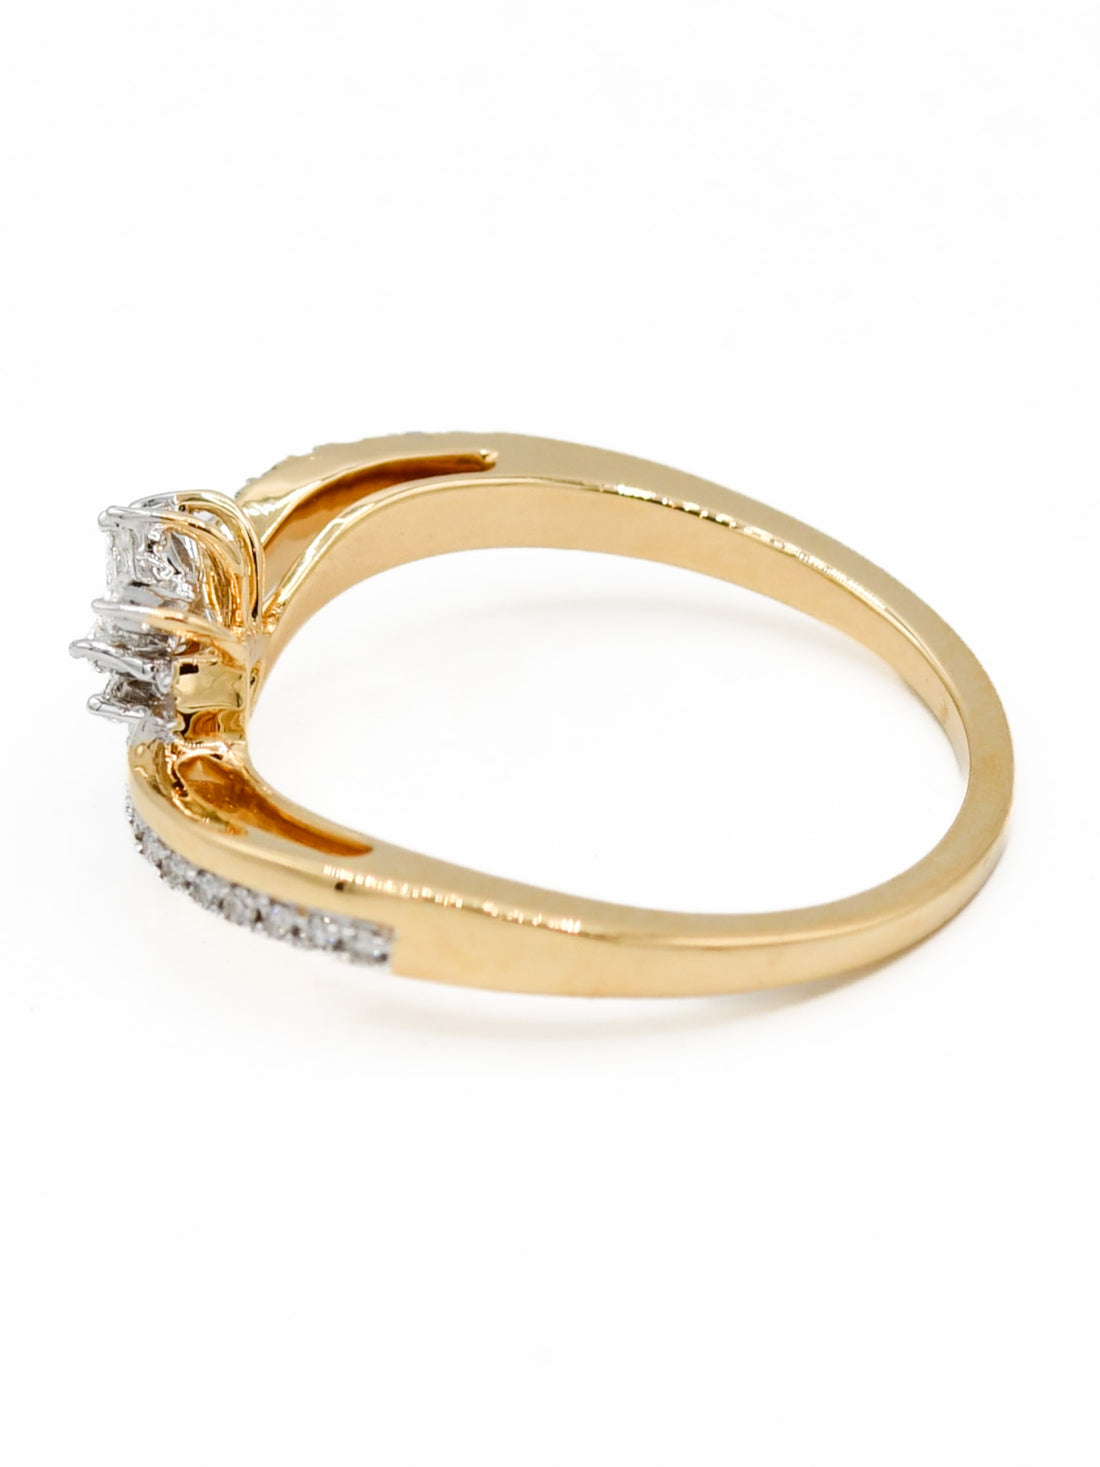 18ct Gold 0.26ct Diamond Ladies Ring - Roop Darshan